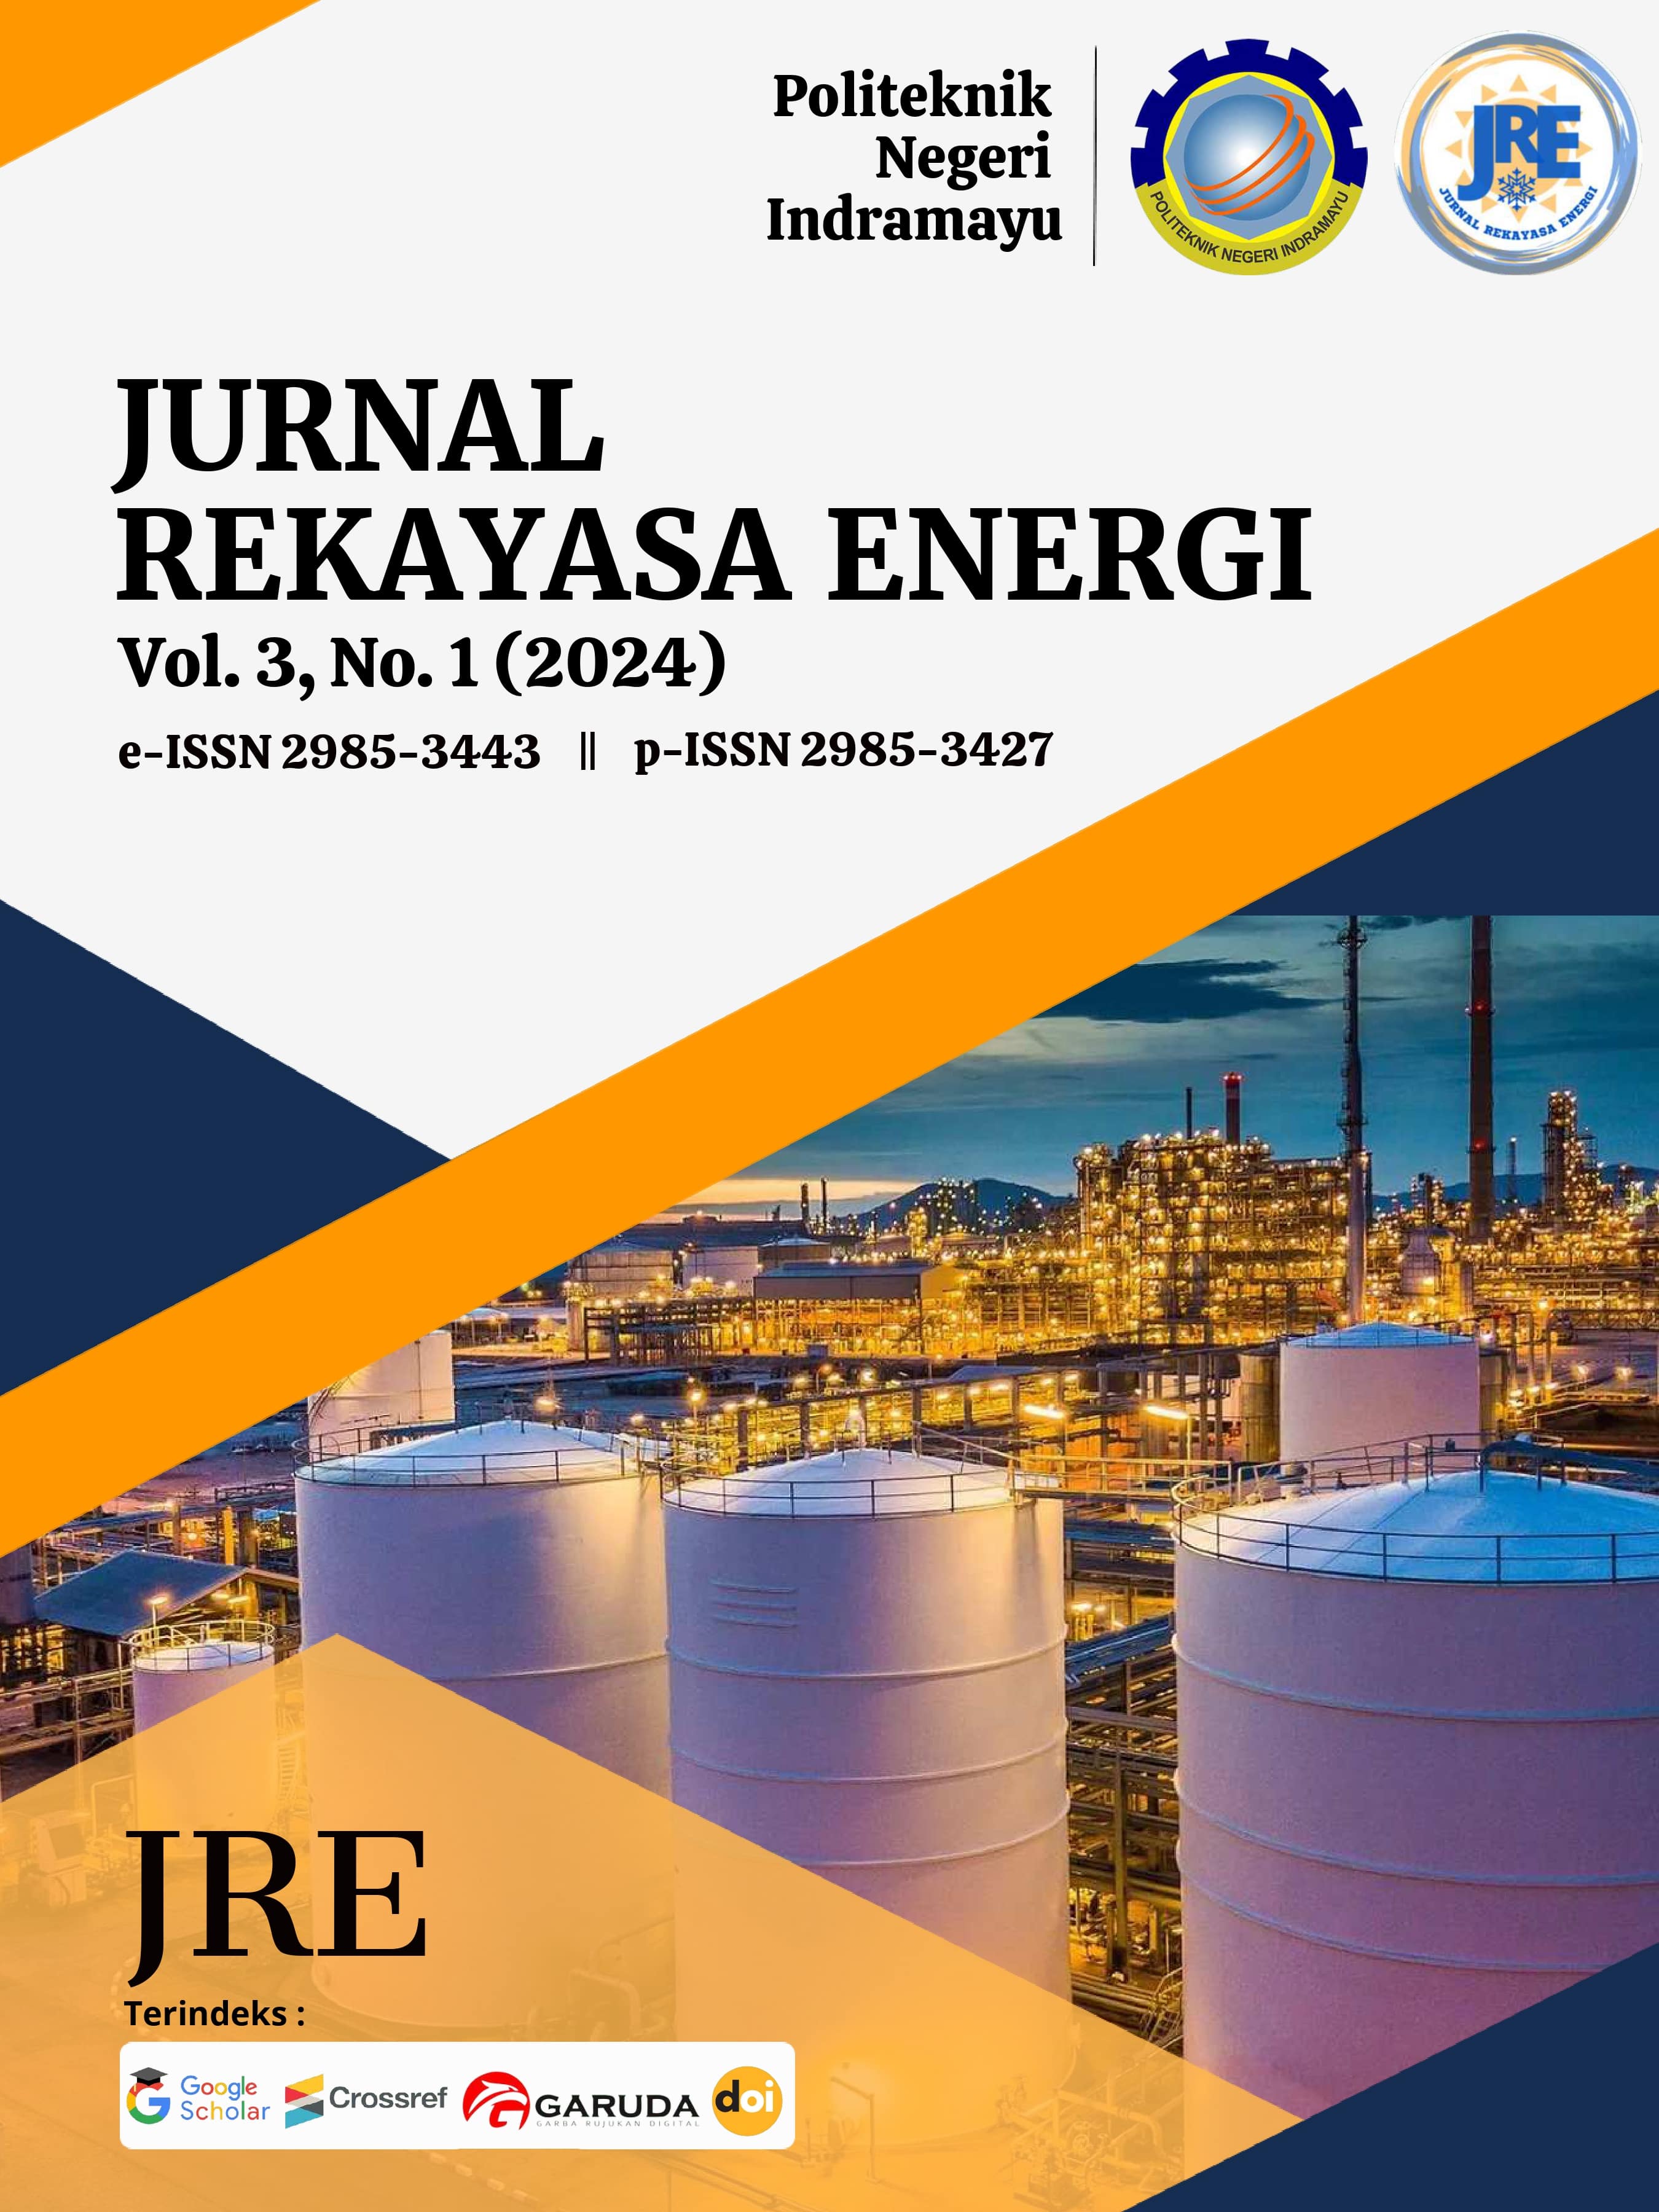 					View Vol. 3 No. 1 (2024): Jurnal Rekayasa Energi
				